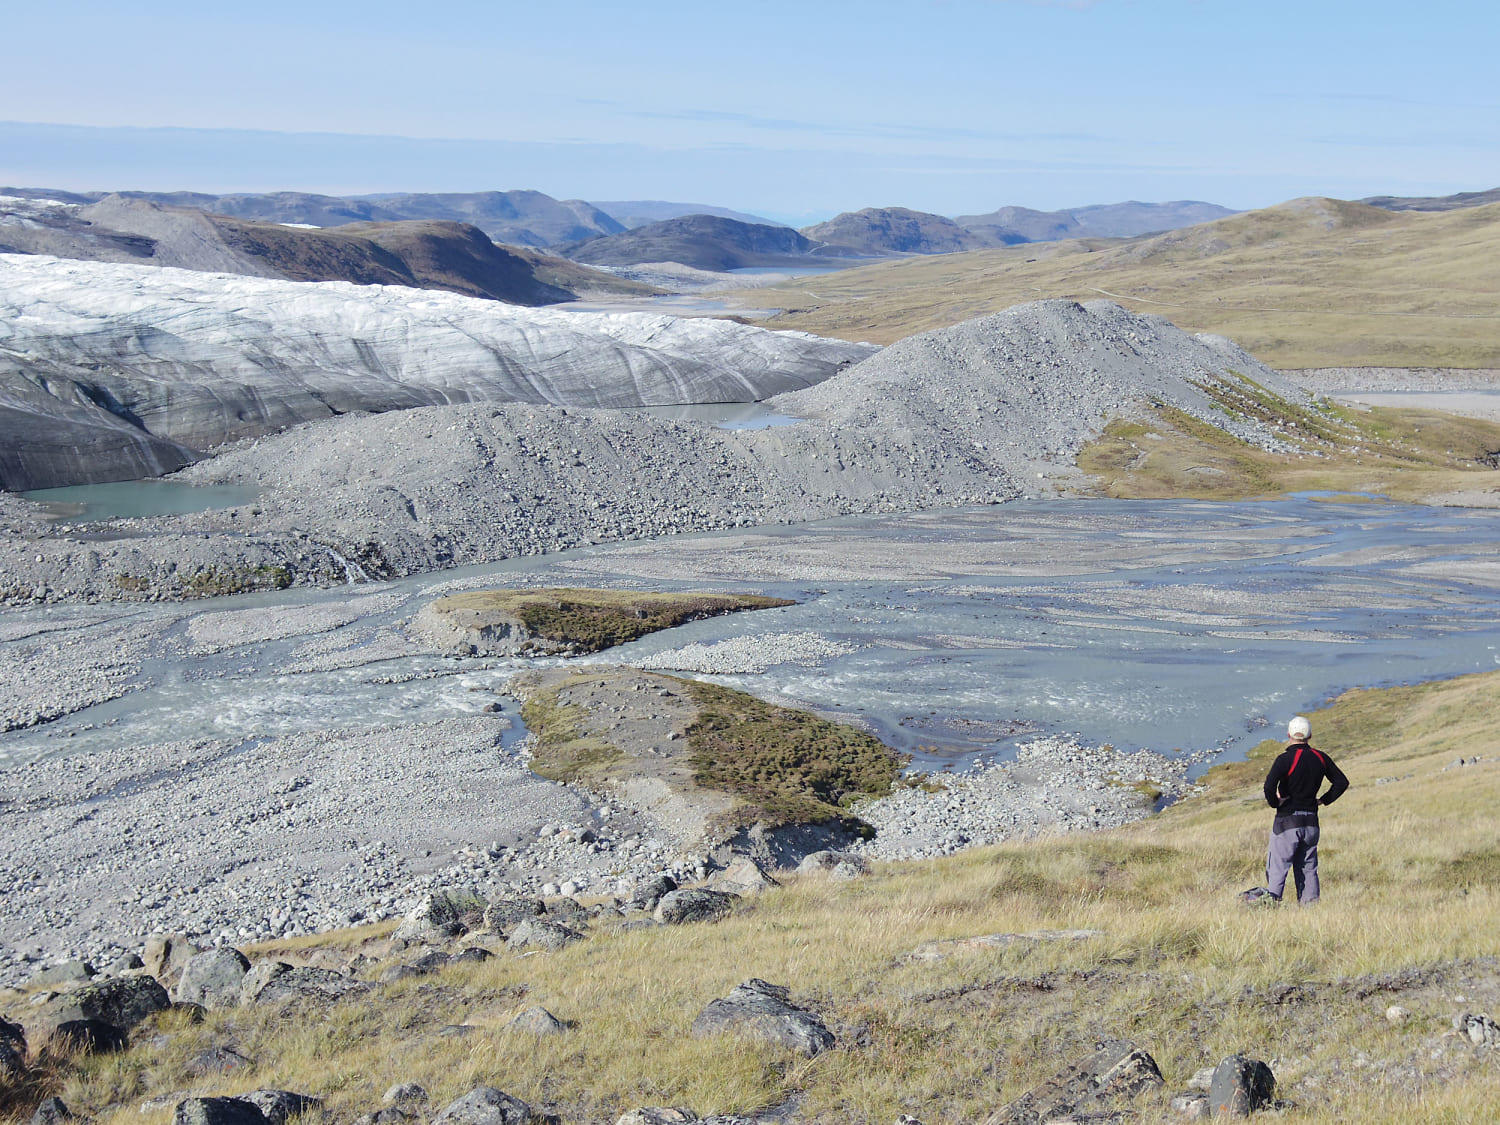 Global warming is making Greenland greener